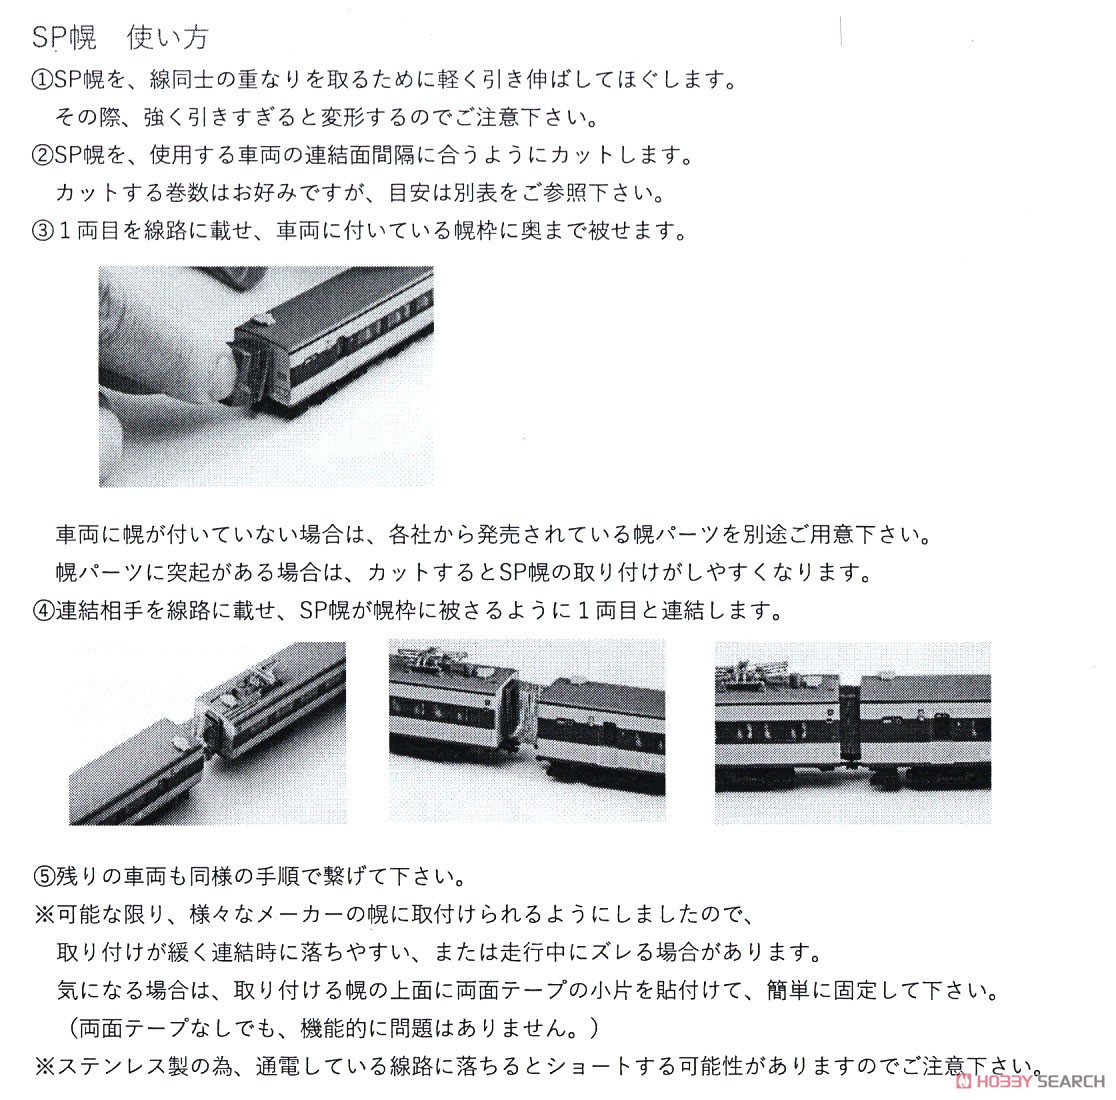 SP幌 LLサイズ (10.1×14.3mm) (カラー/グレー) (6個入) (鉄道模型) 設計図3